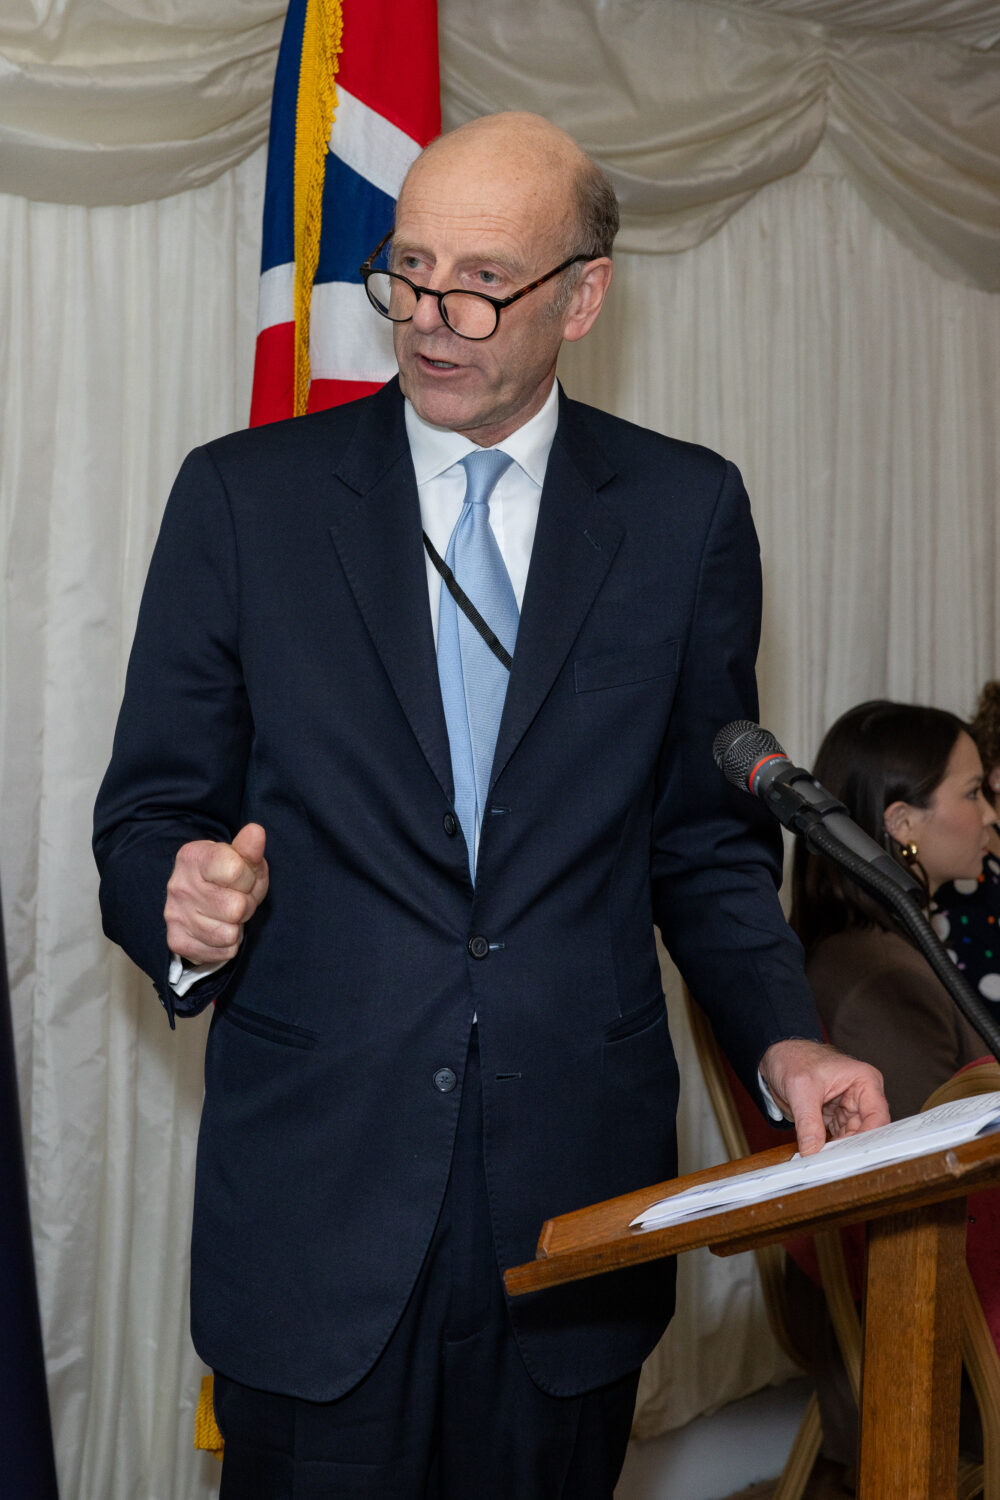 Rupert Goodman, Chairman of the British-Kazakh Society, addresses the guests